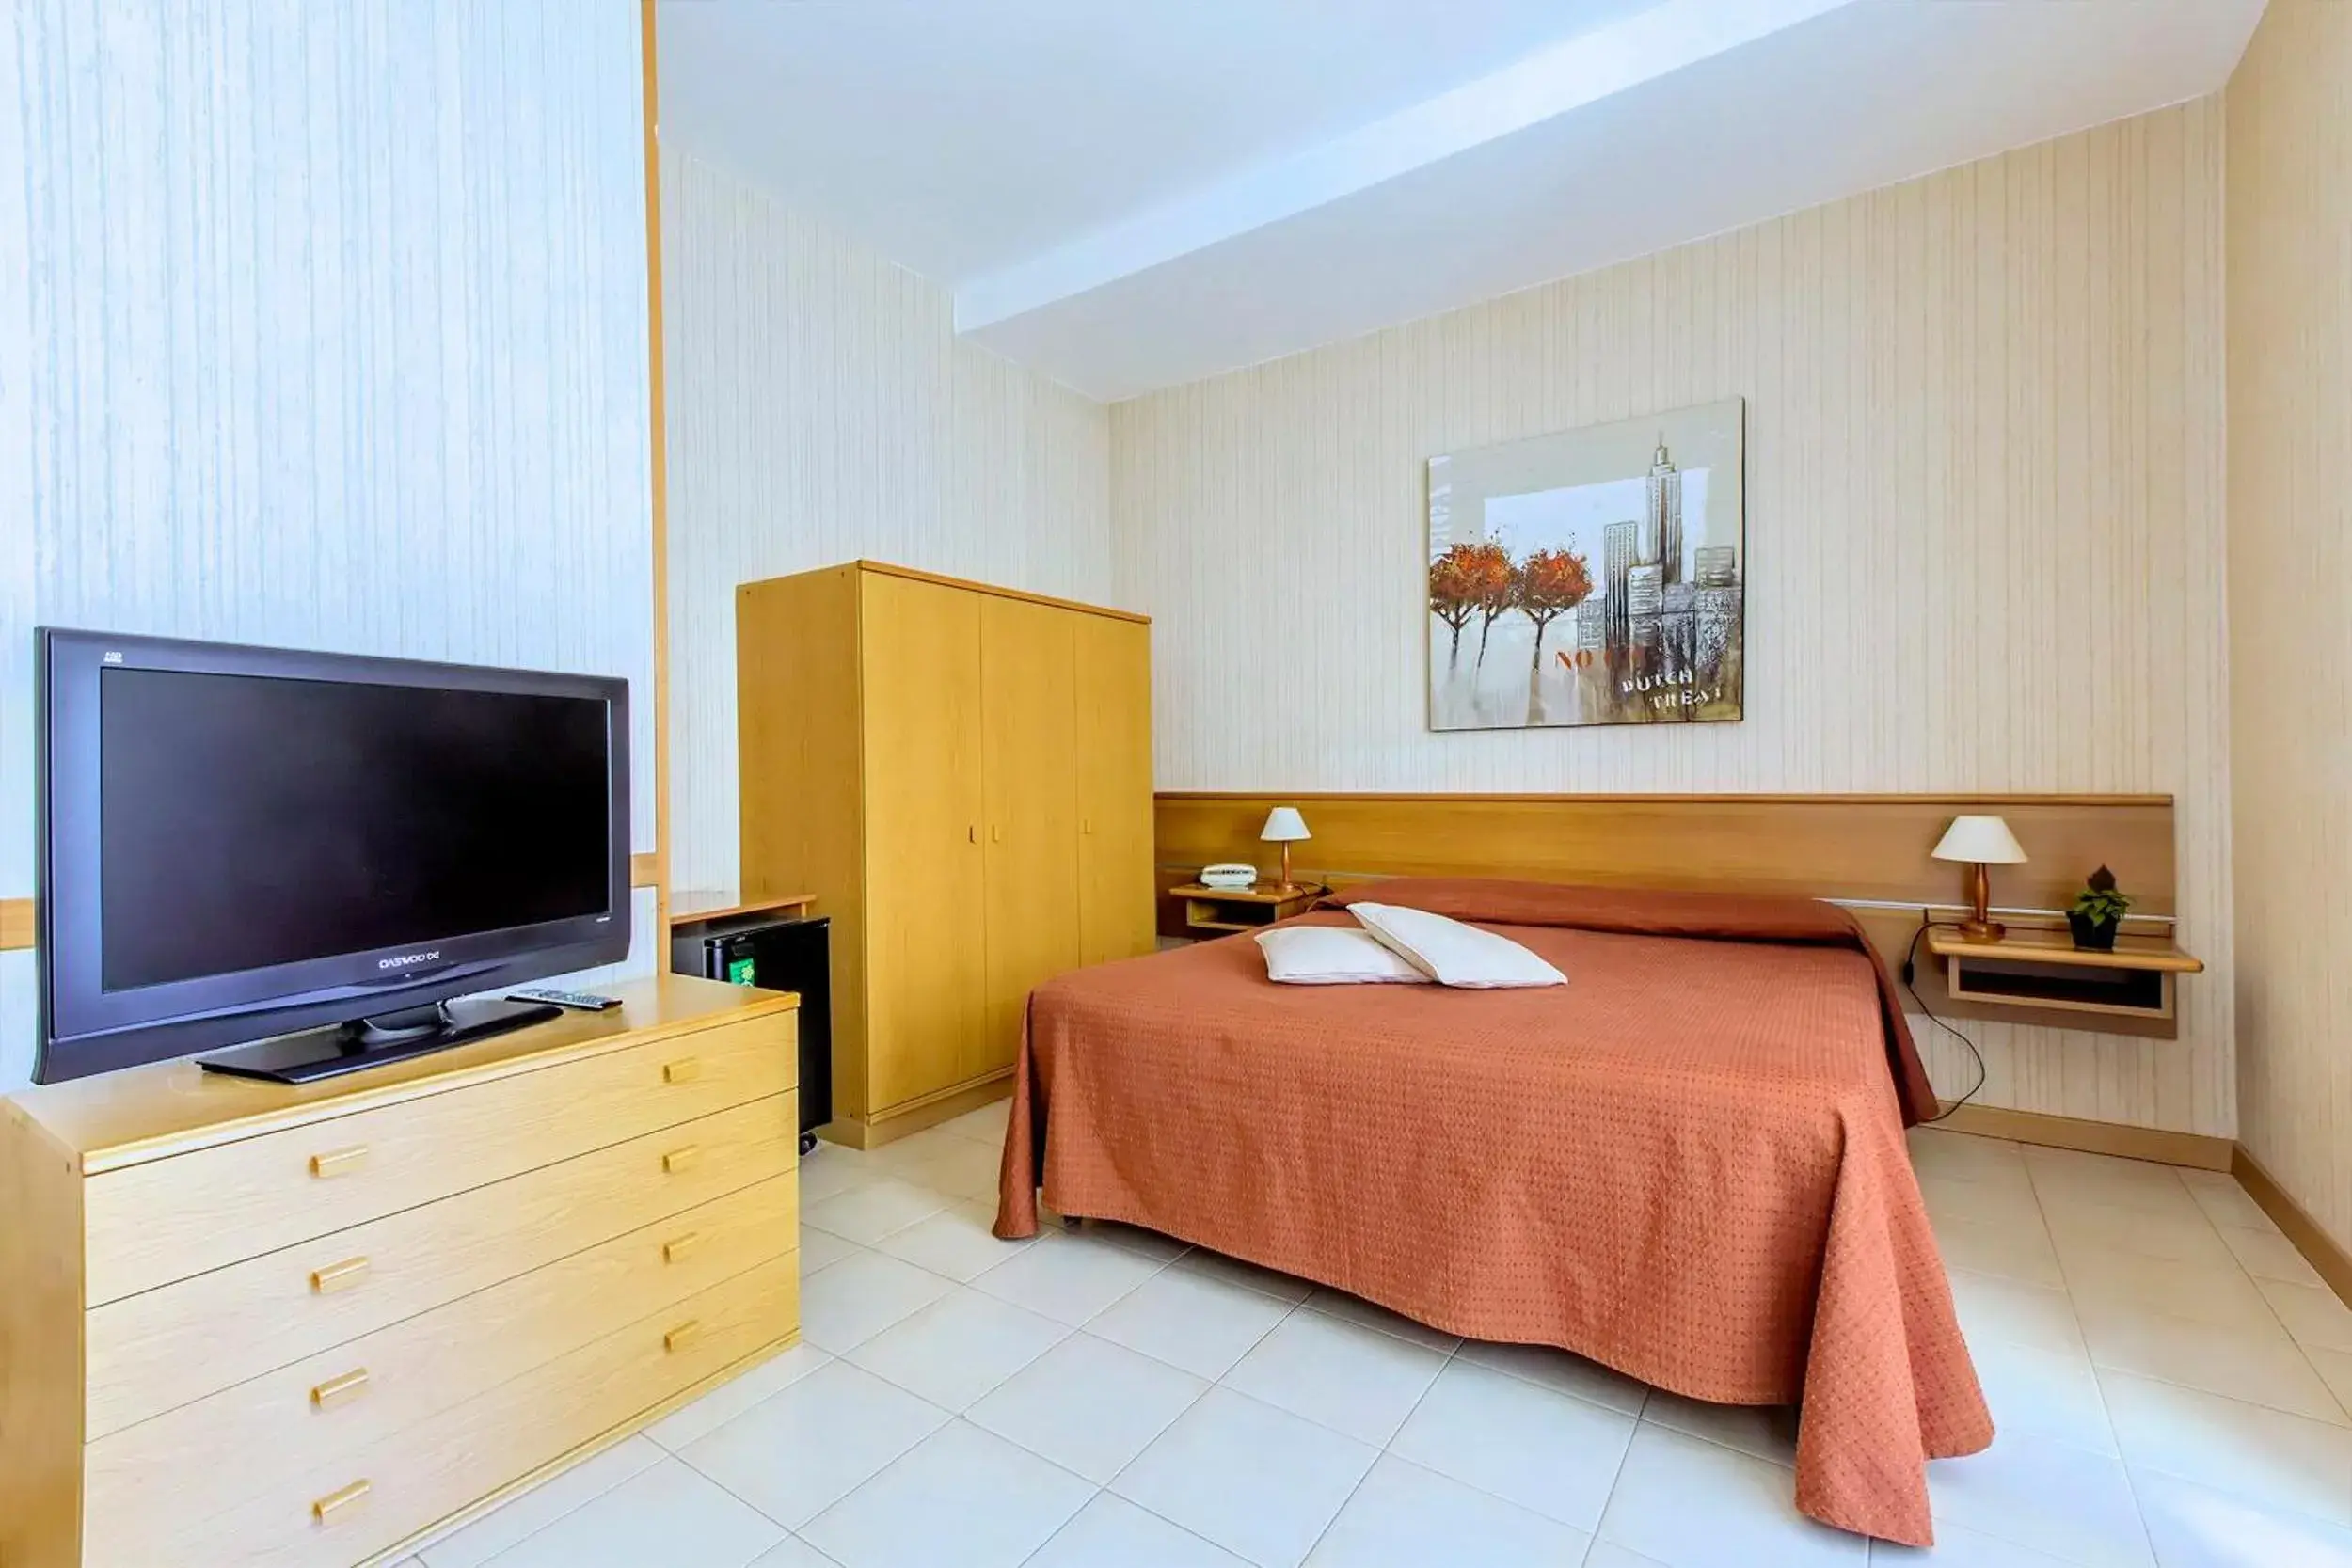 Bed, Room Photo in Hotel Residence Ulivi E Palme